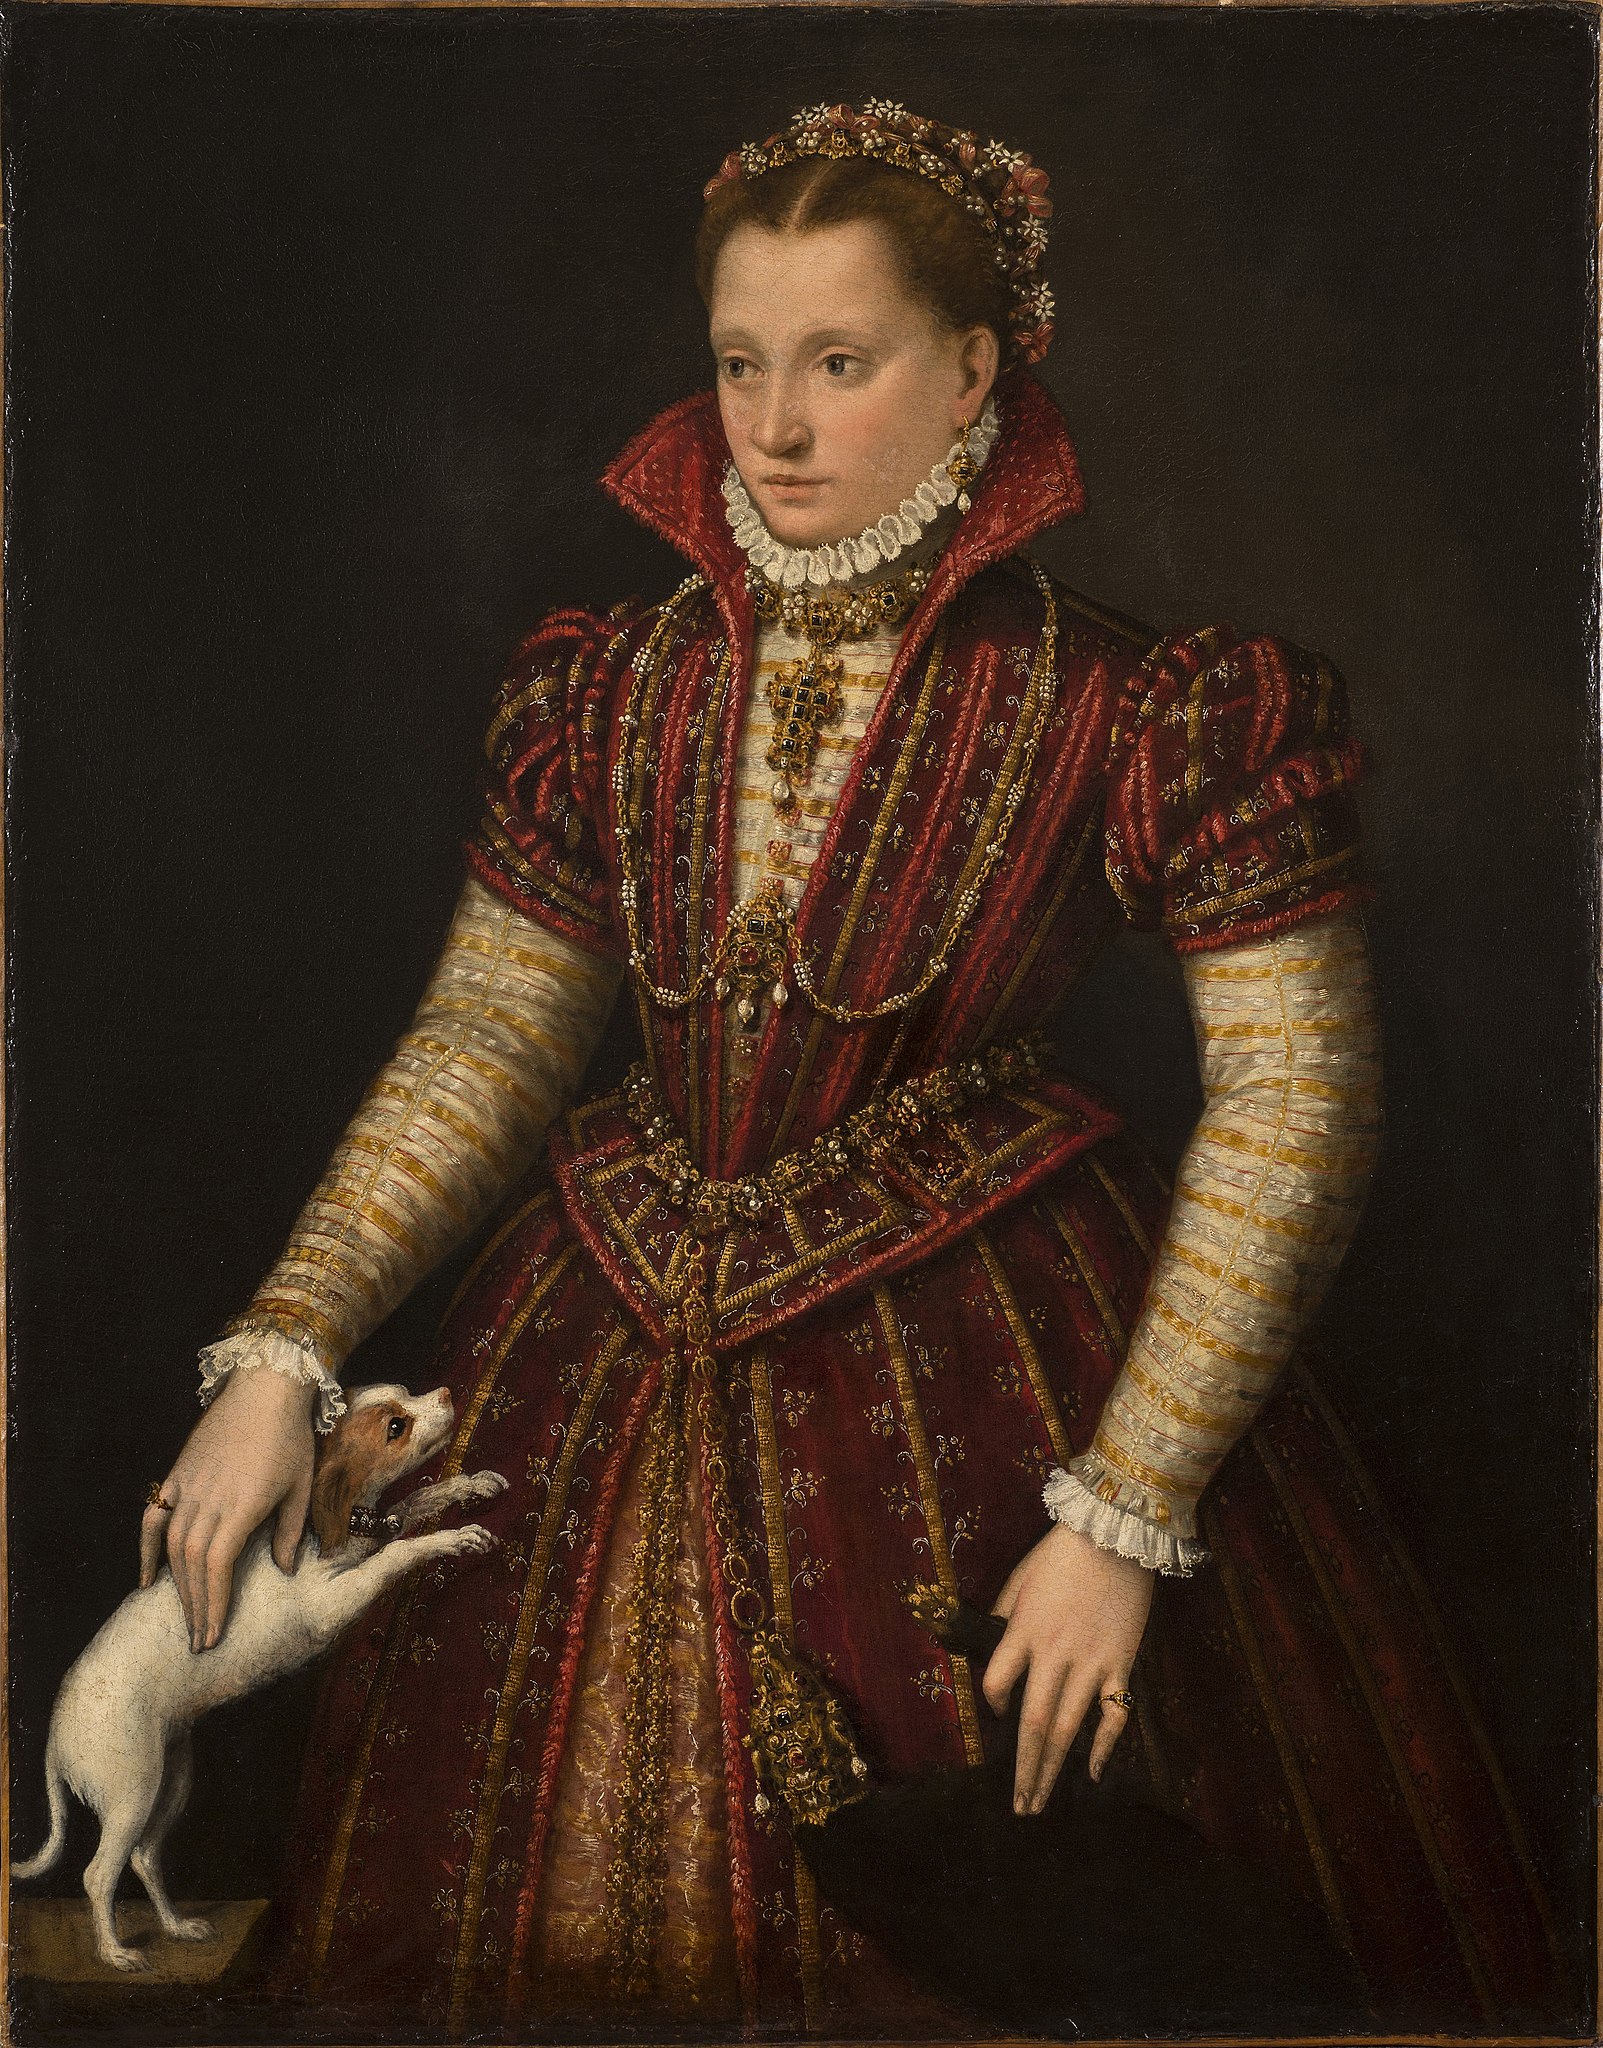 Lavinia Fontana "Portrait Of A Noblewoman" (Circa 1580)